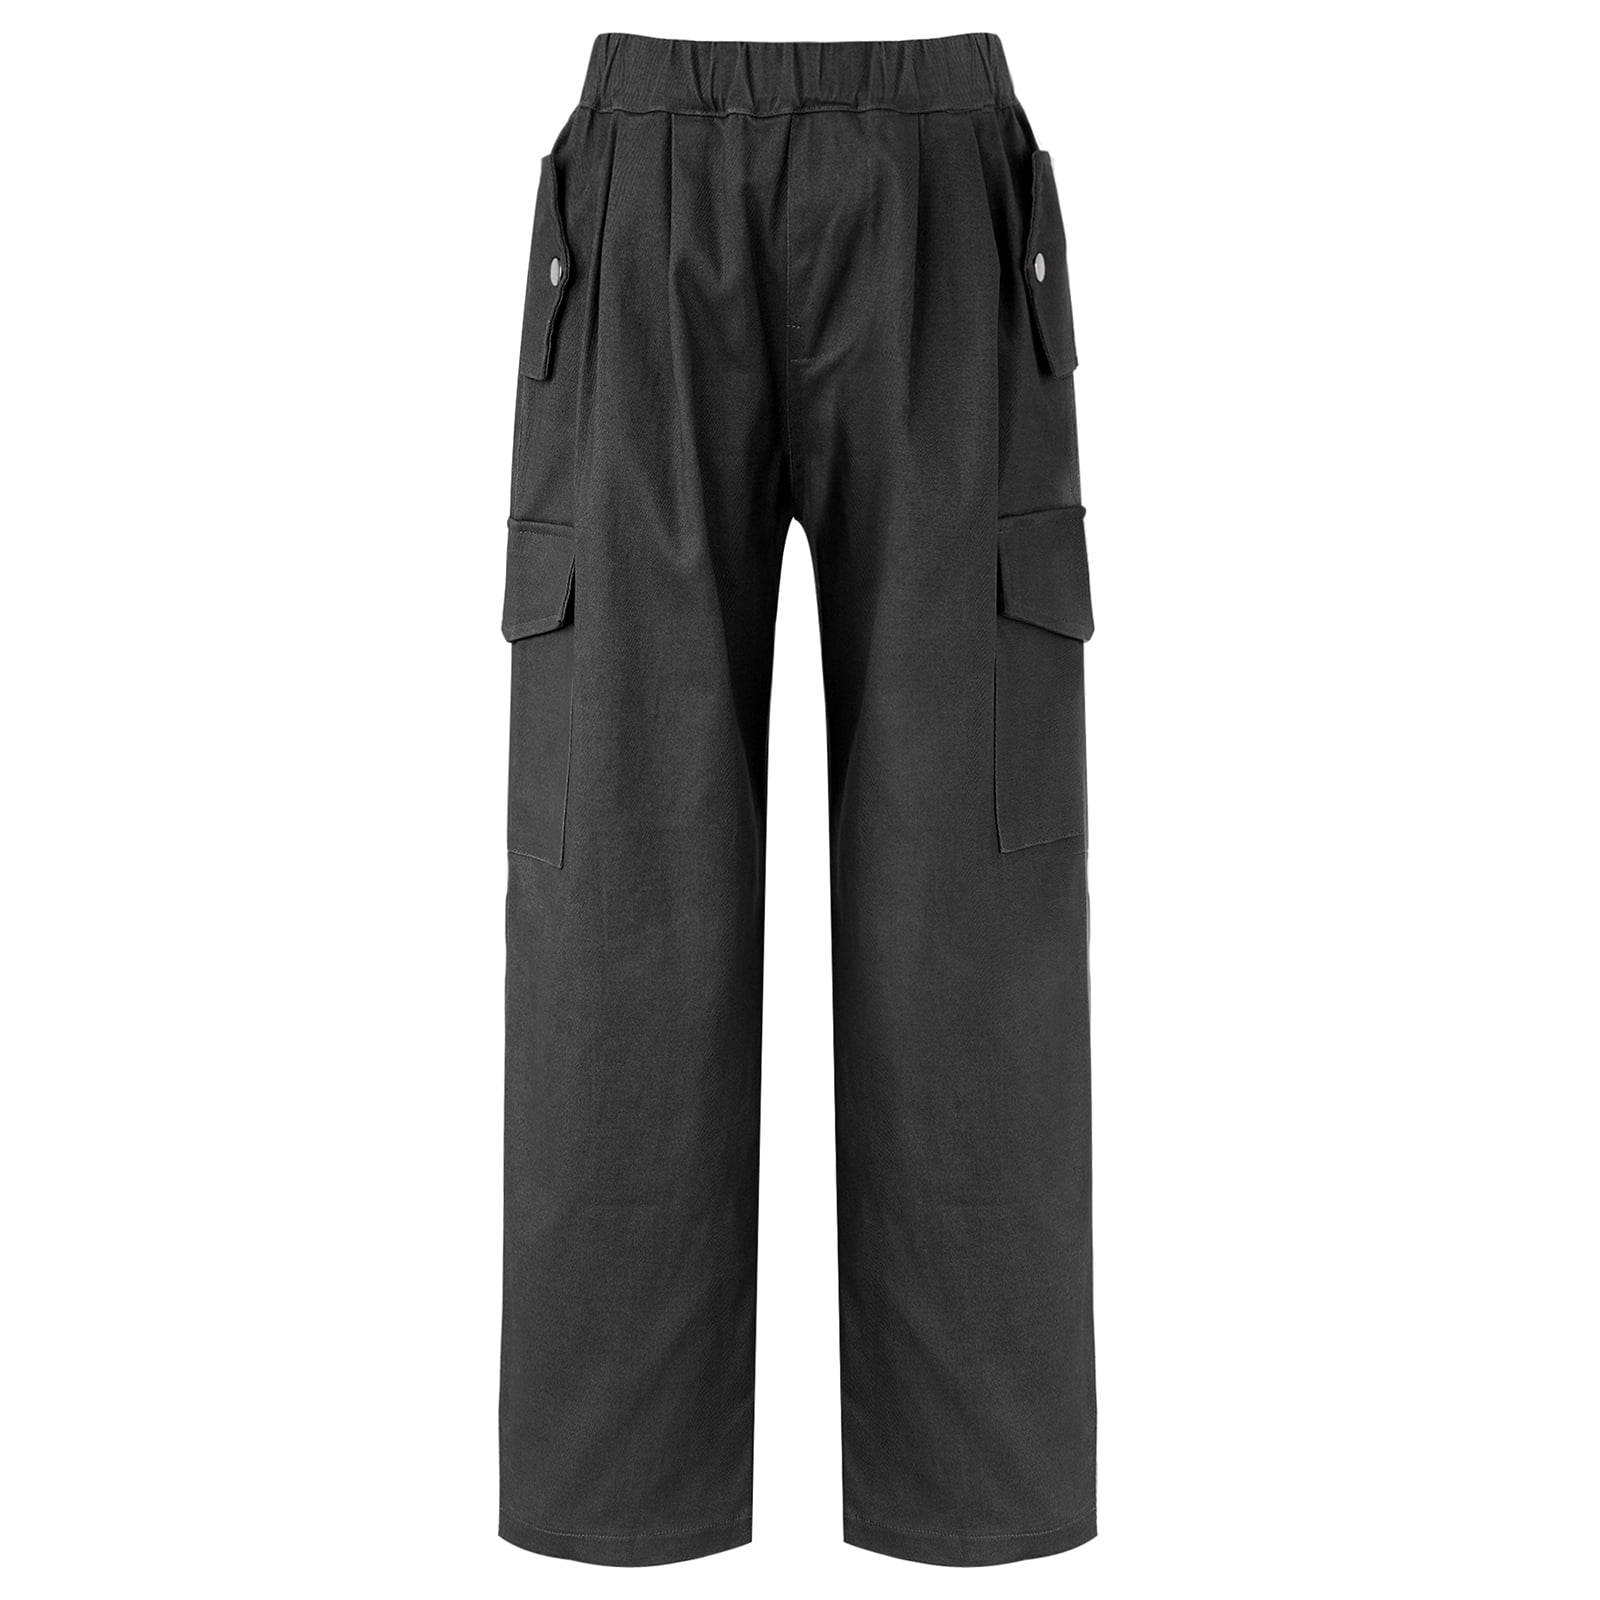 Drawstring Bottoms Jogger inhzoy Cargo Cotton Black 14 with Pockets Kids Fashion 4 Girls Pants